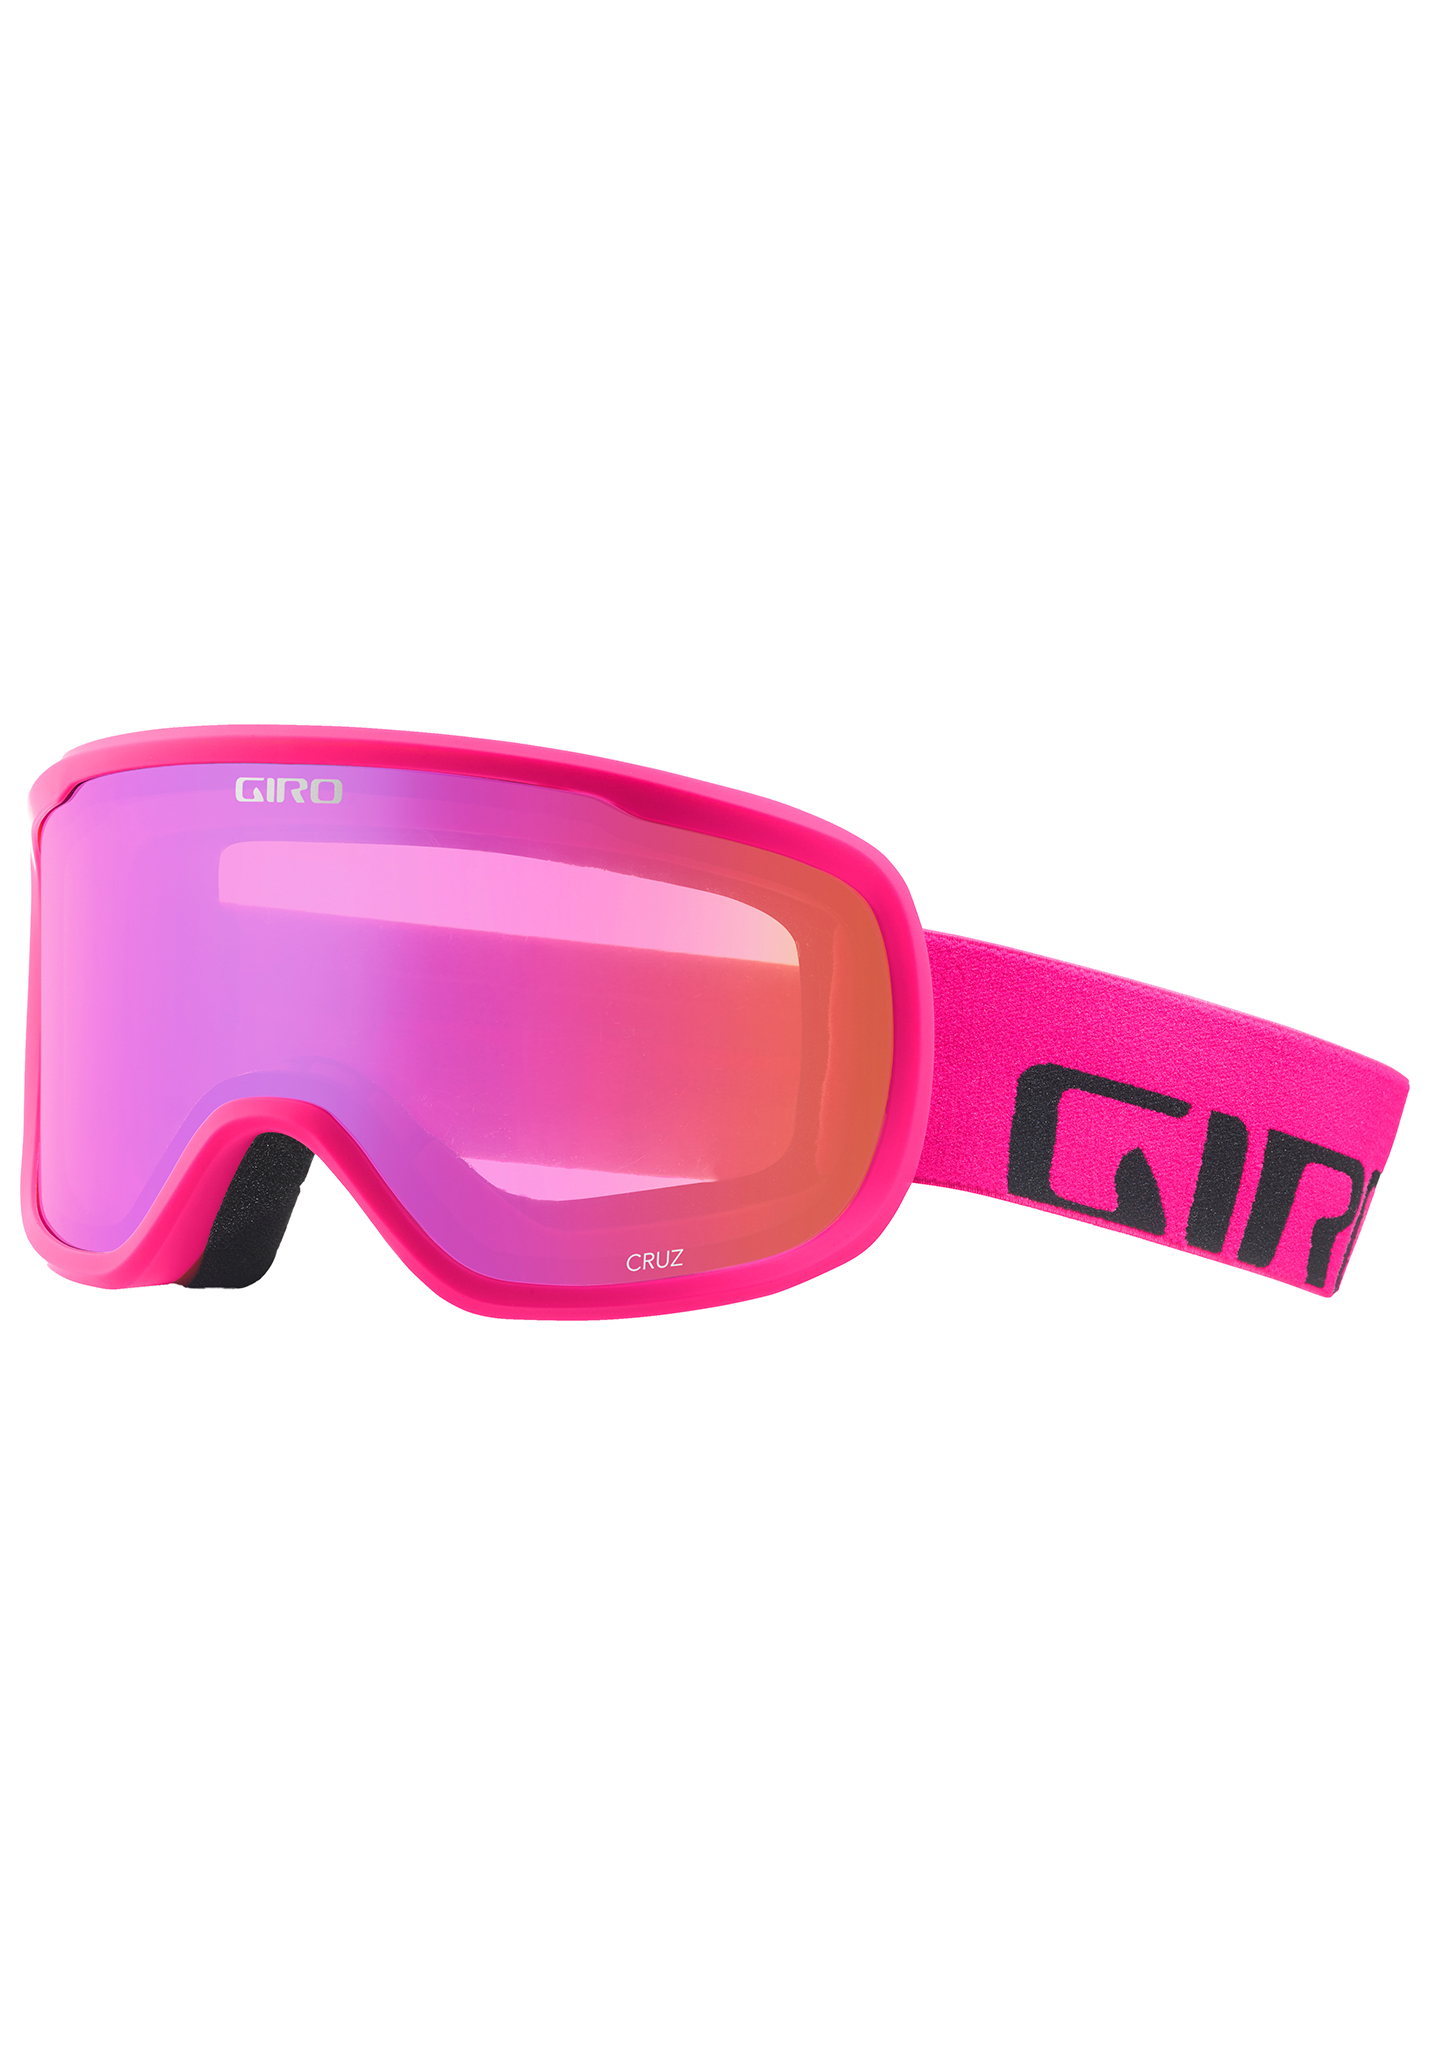 Giro Cruz Snowboardbrillen pink One Size